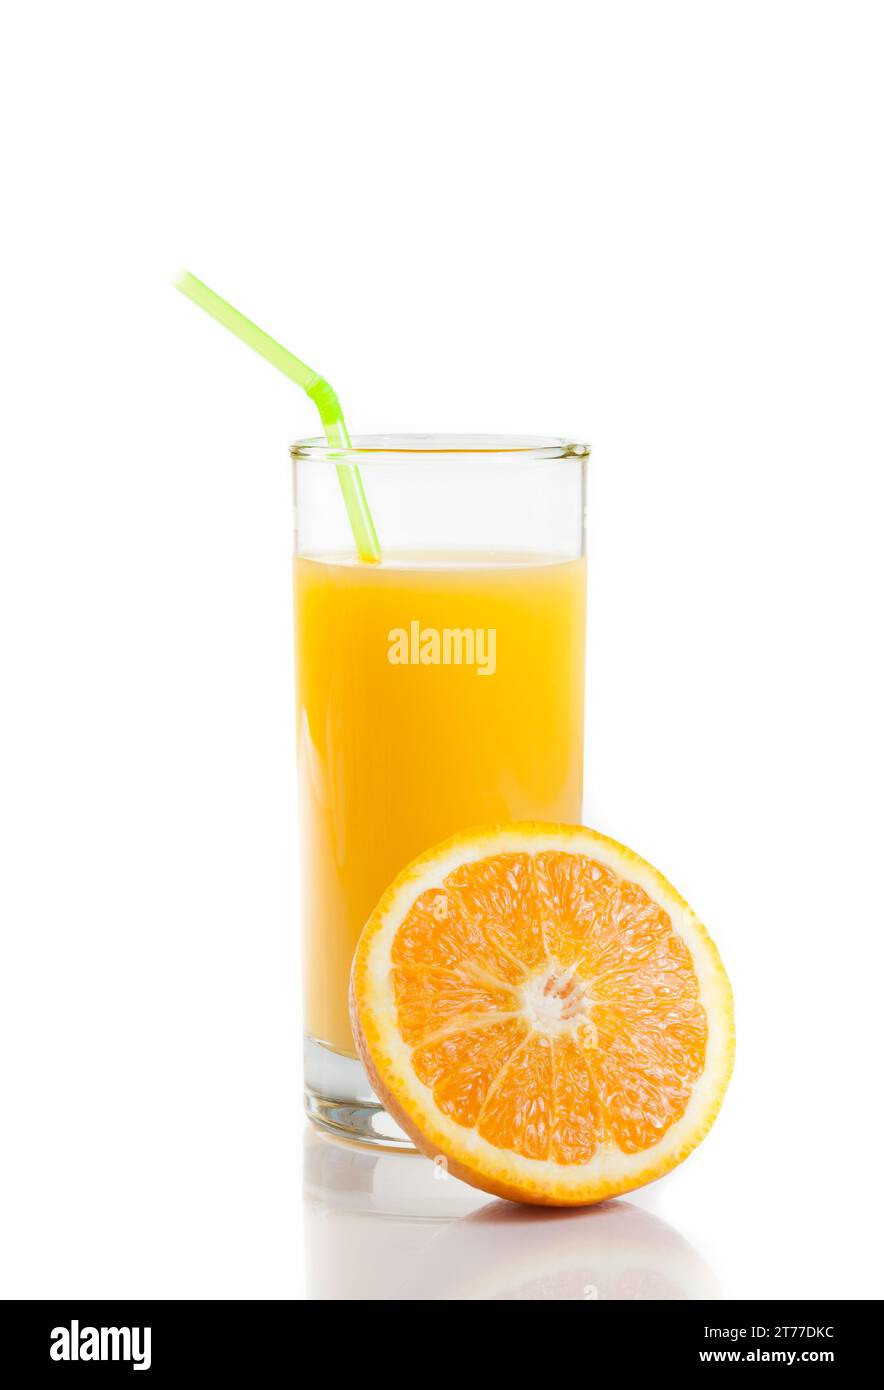 full glass of orange juice with straw near half orange on white background Stock Photo